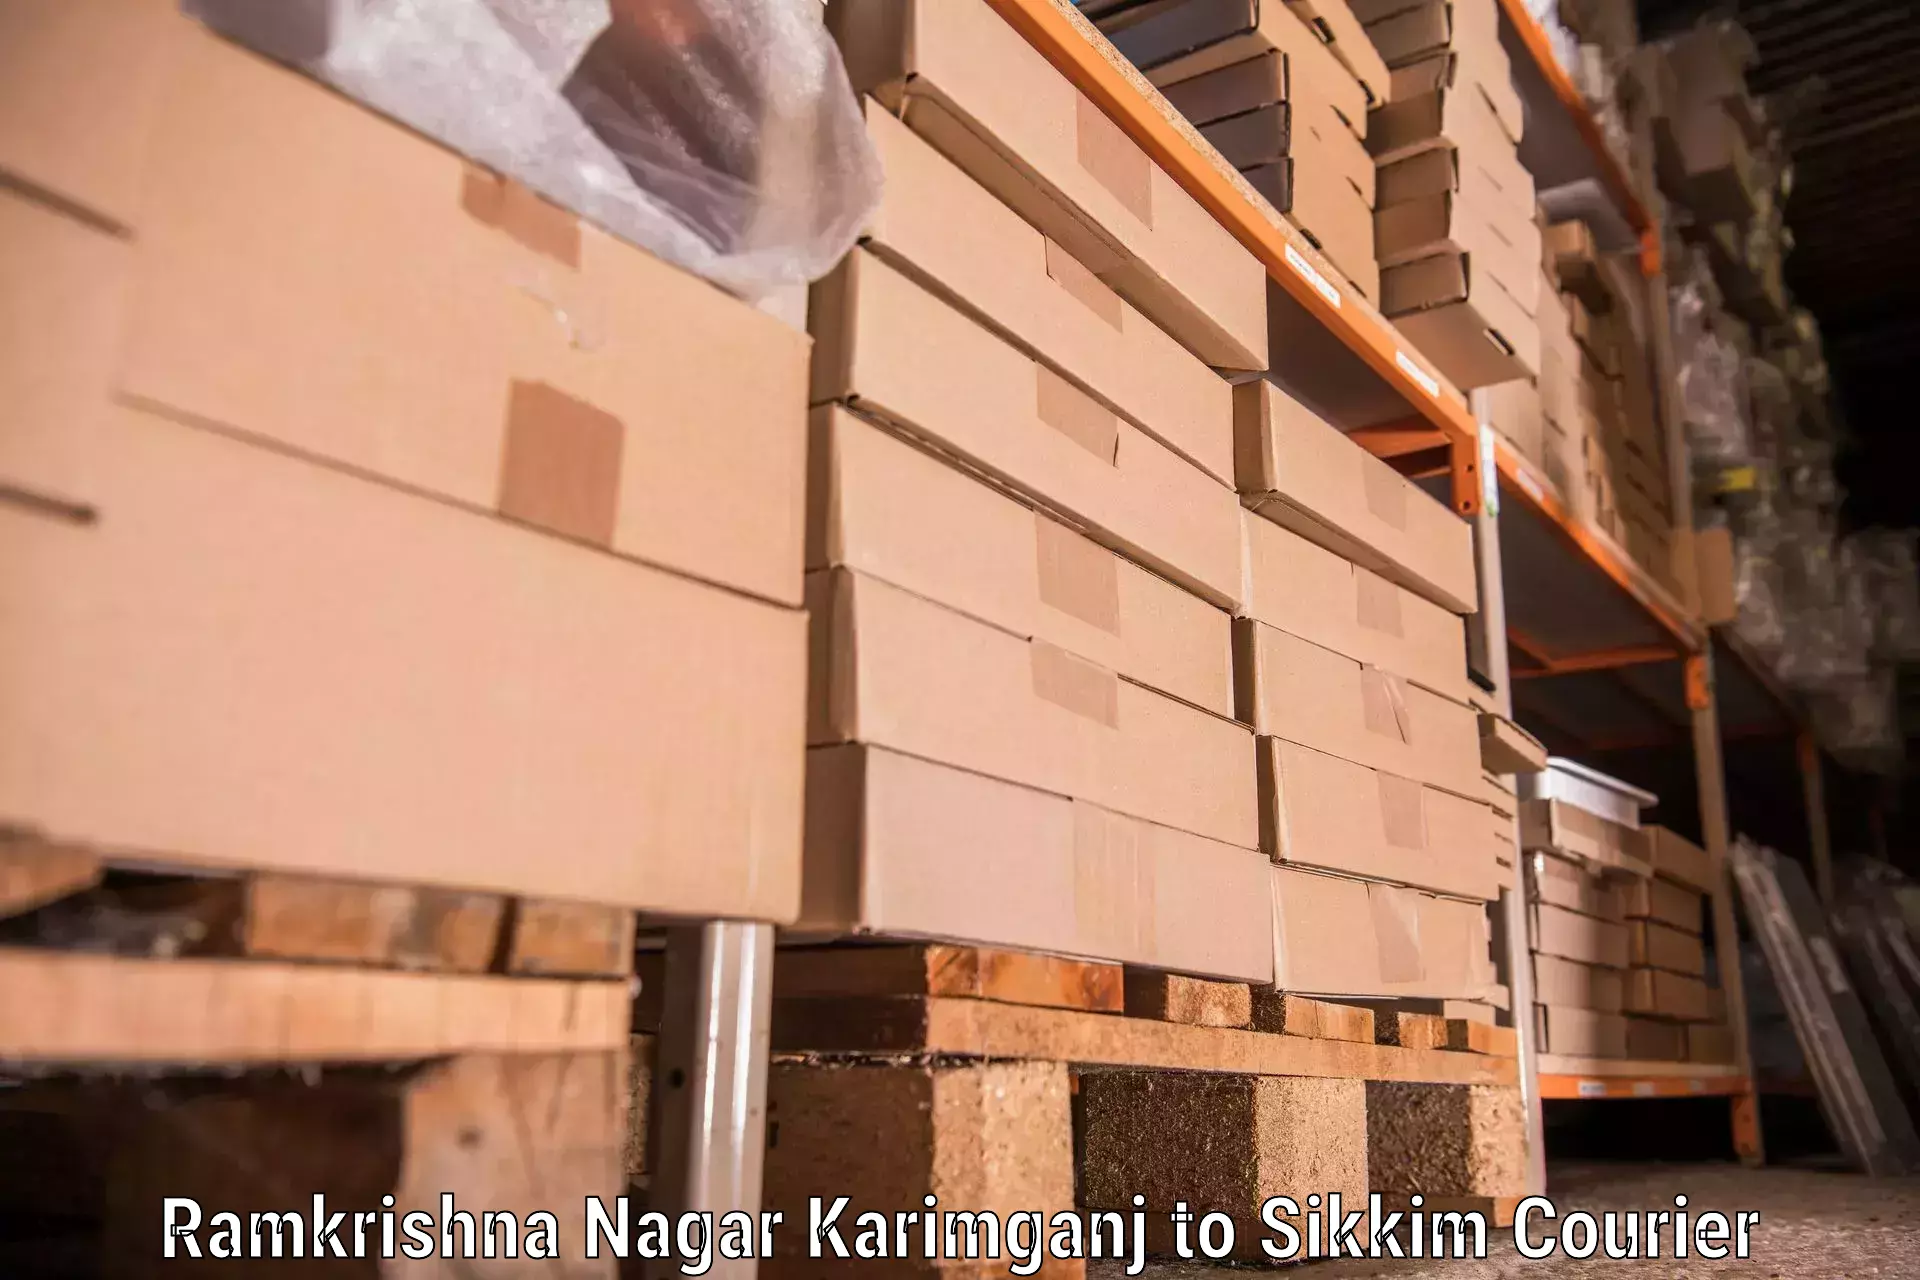 Efficient moving company Ramkrishna Nagar Karimganj to Sikkim